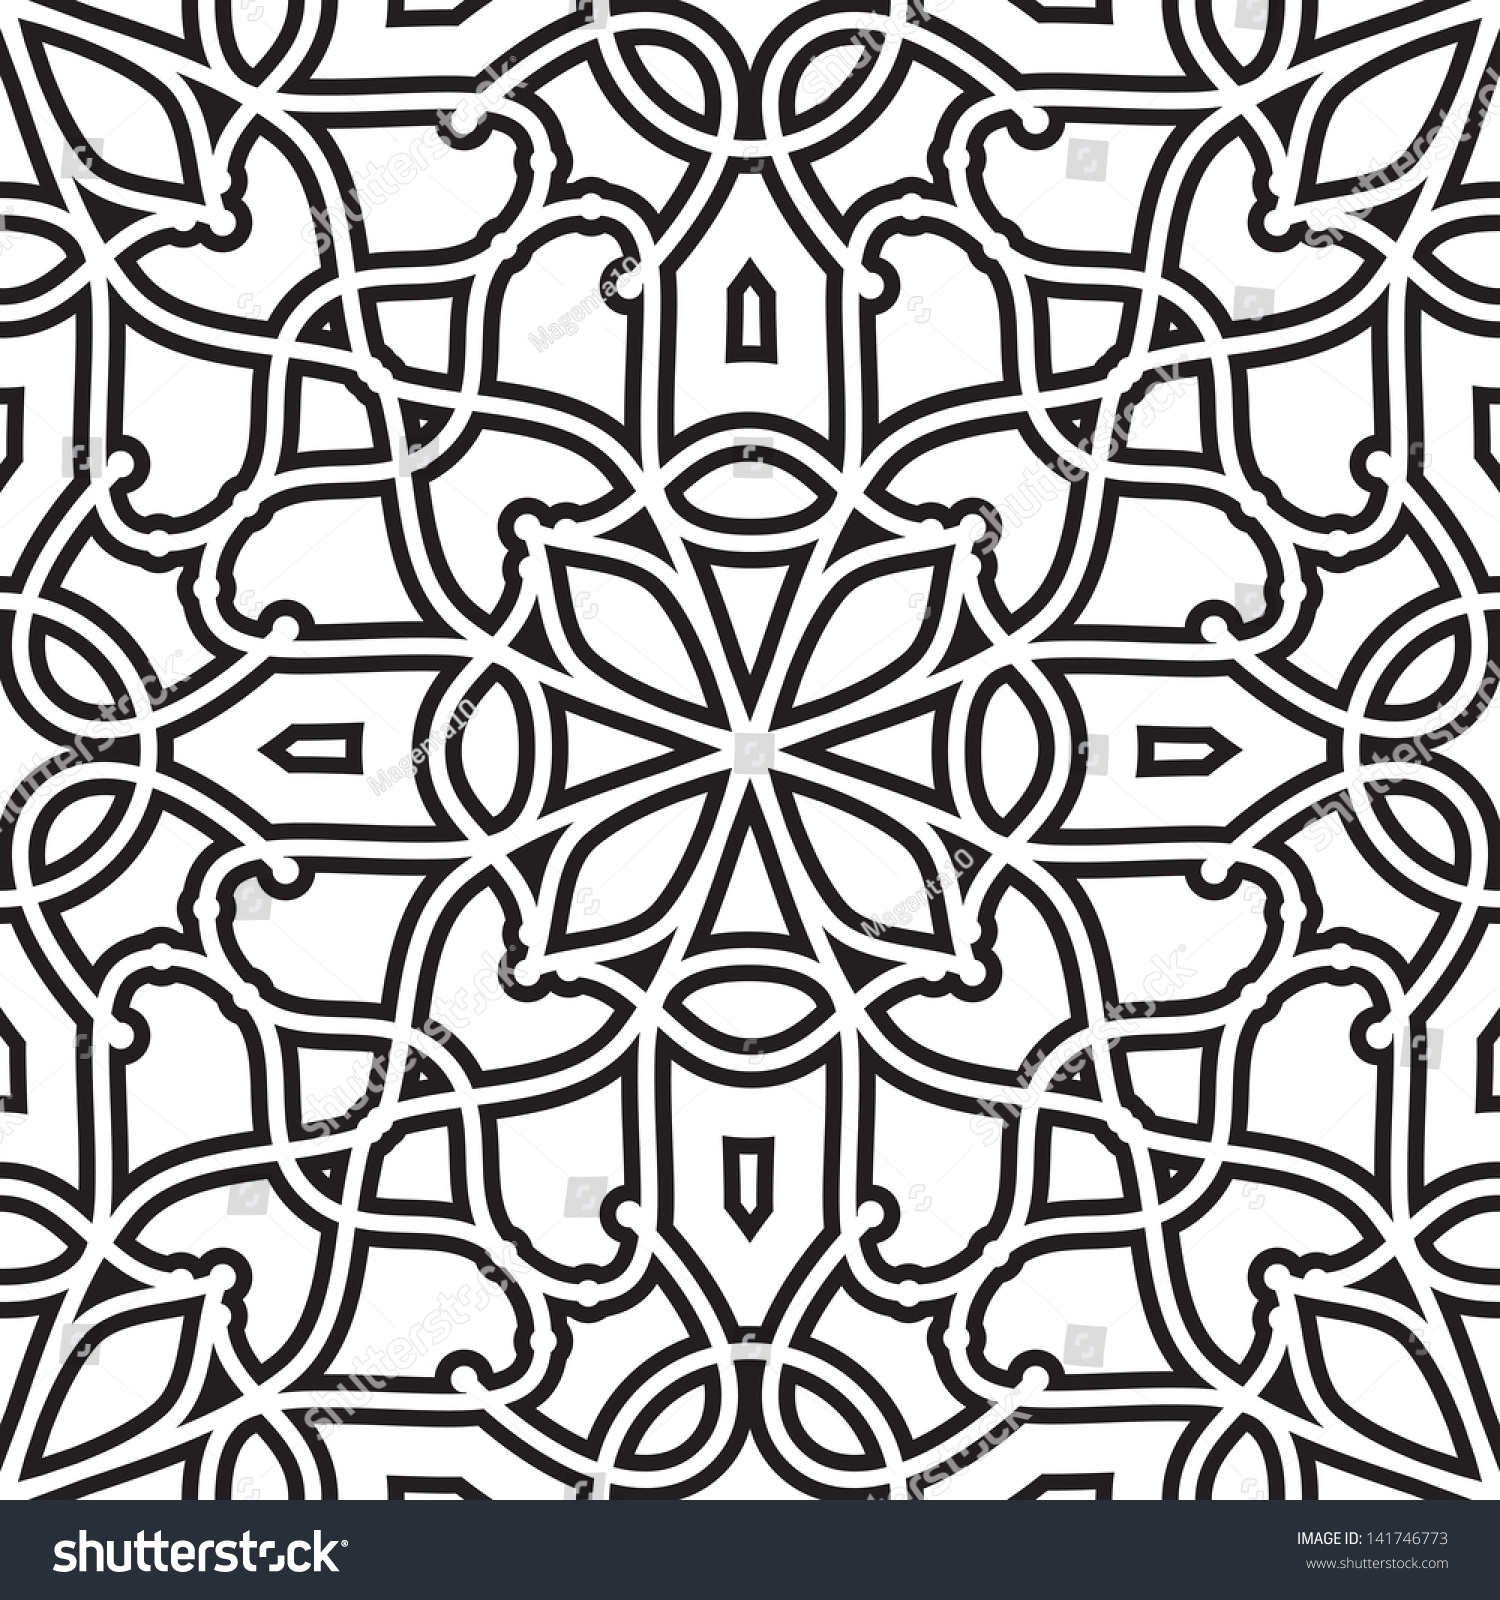 Abstract Black White Background Geometric Seamless Stock Illustration ...